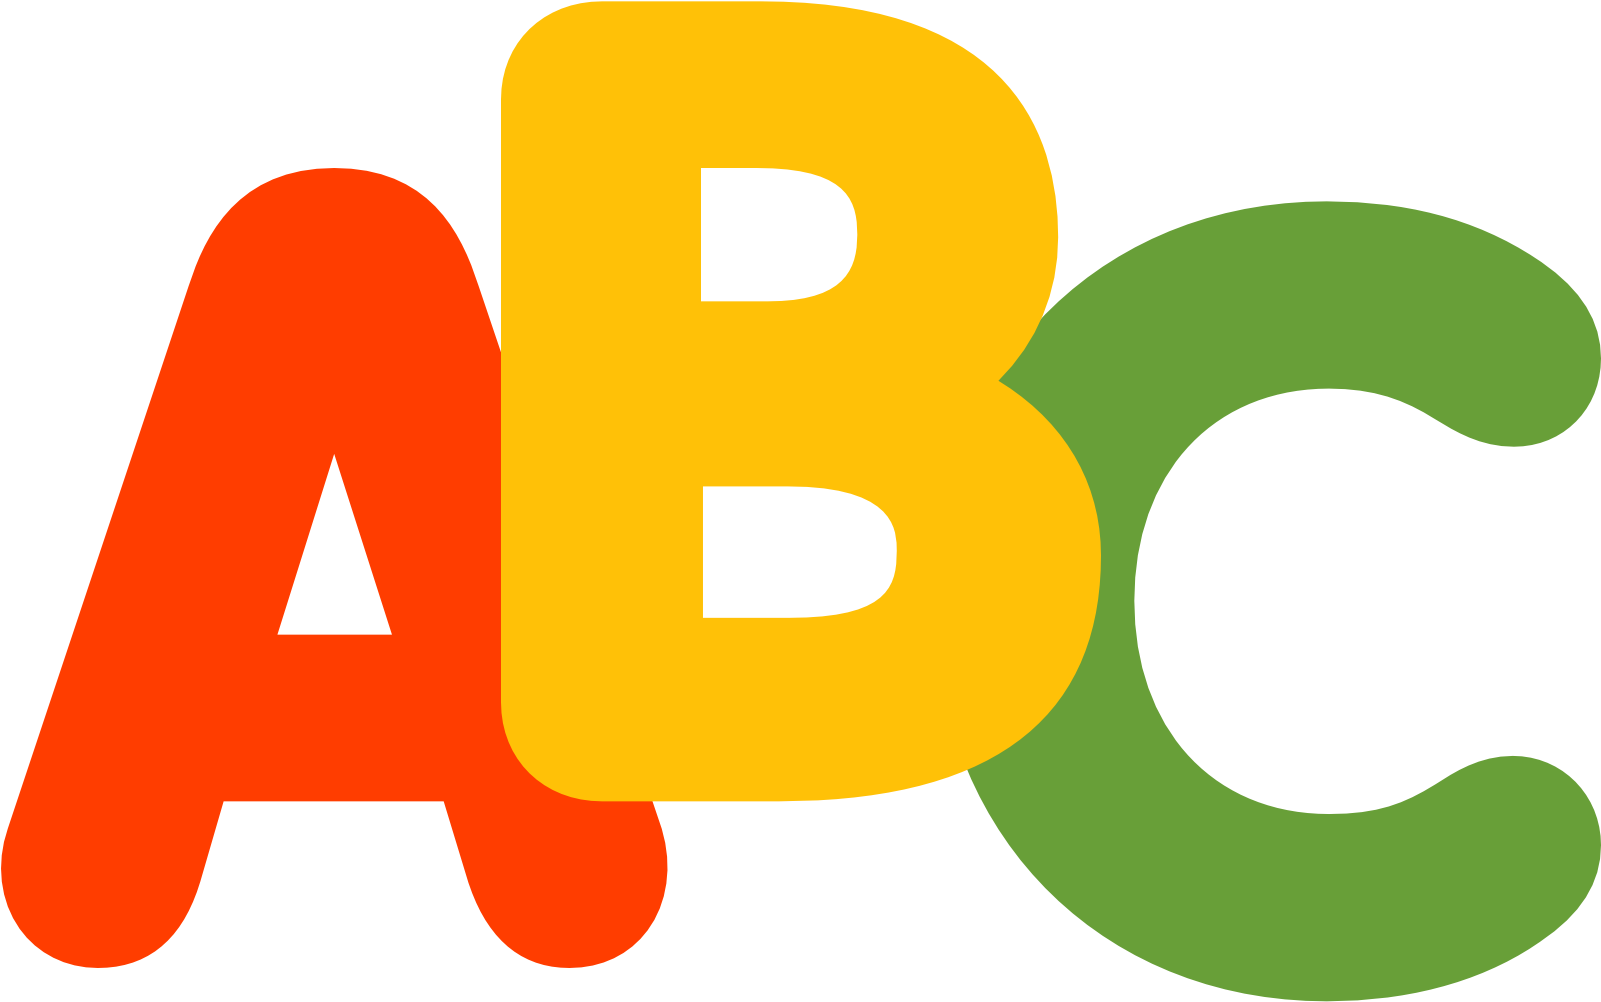 9 по английскому буквами. ABC картинка. Английские буквы без фона. ABC буквы. Английские буквы ABC.